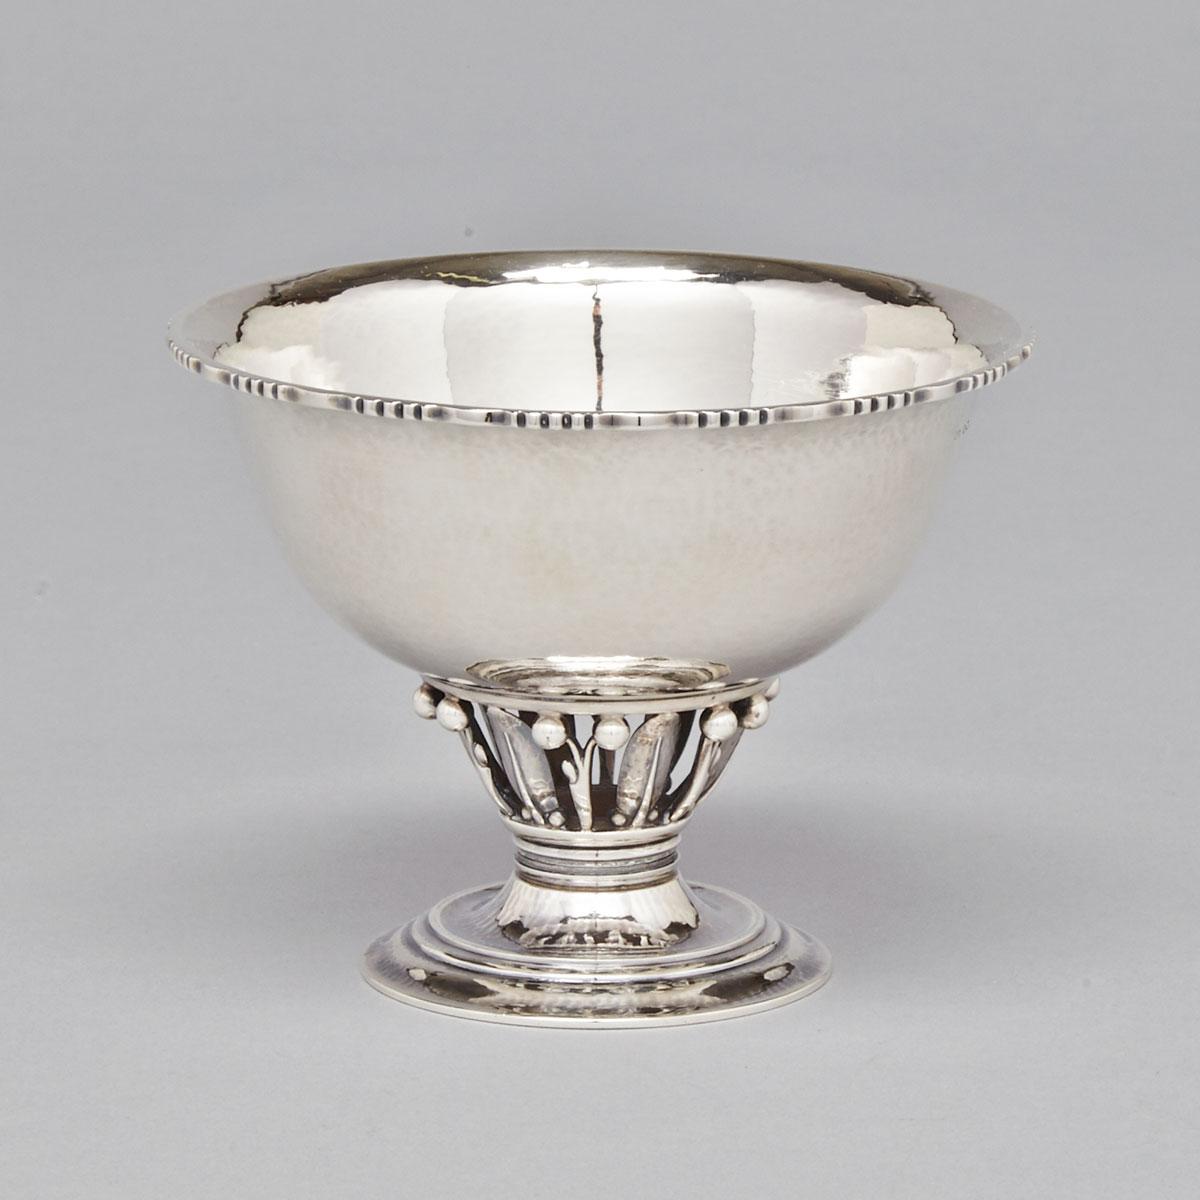 Danish Silver ‘Louvre’ Footed Bowl, #180B, Georg Jensen, Copenhagen, c.1927